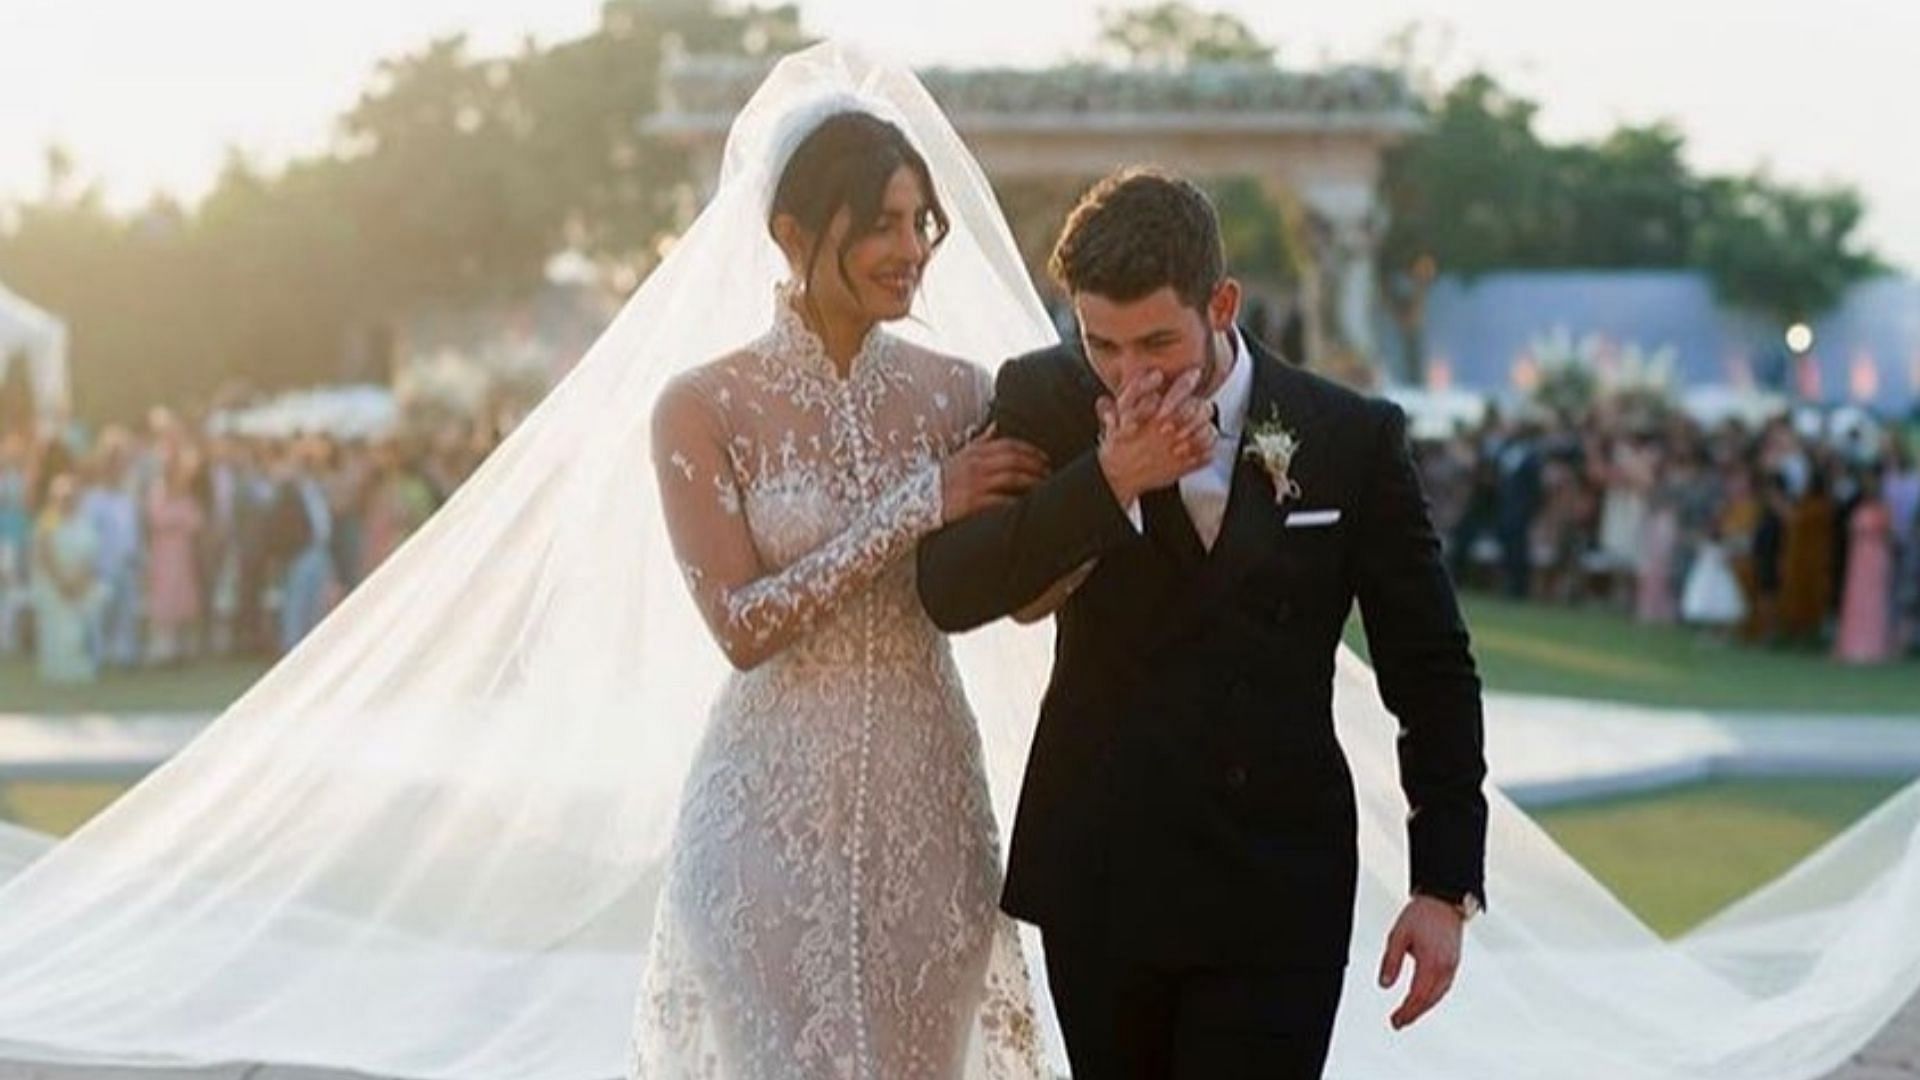 Priyanka Chopra and Nick Jonas on their wedding day.